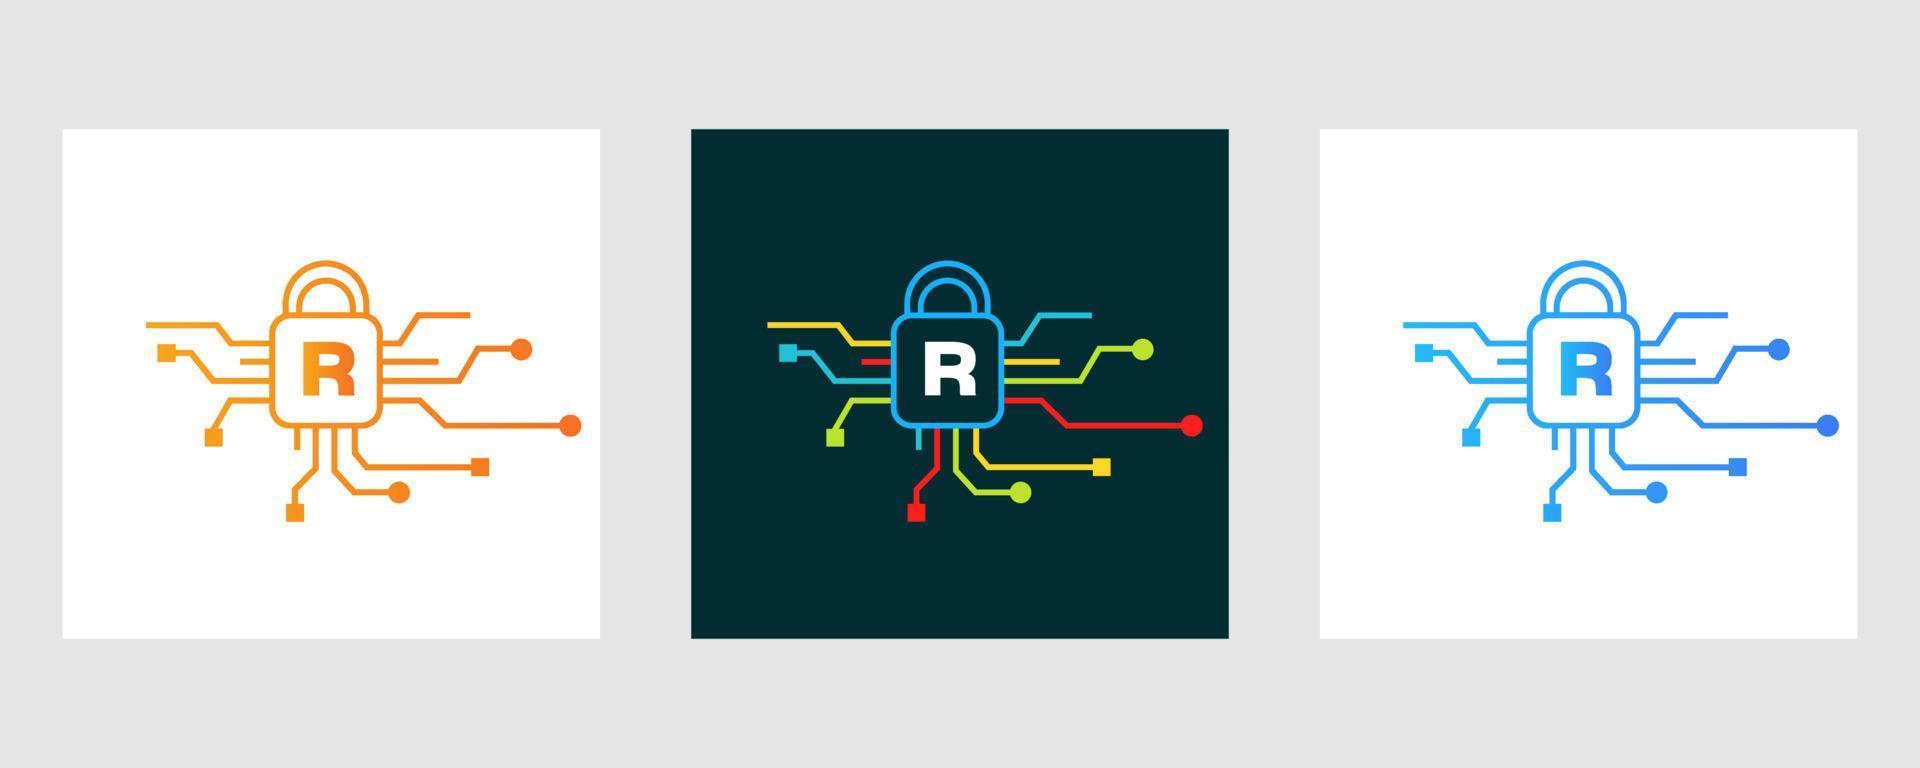 brief r cyber veiligheid logo. internet veiligheid teken, cyber bescherming, technologie, biotechnologie symbool vector